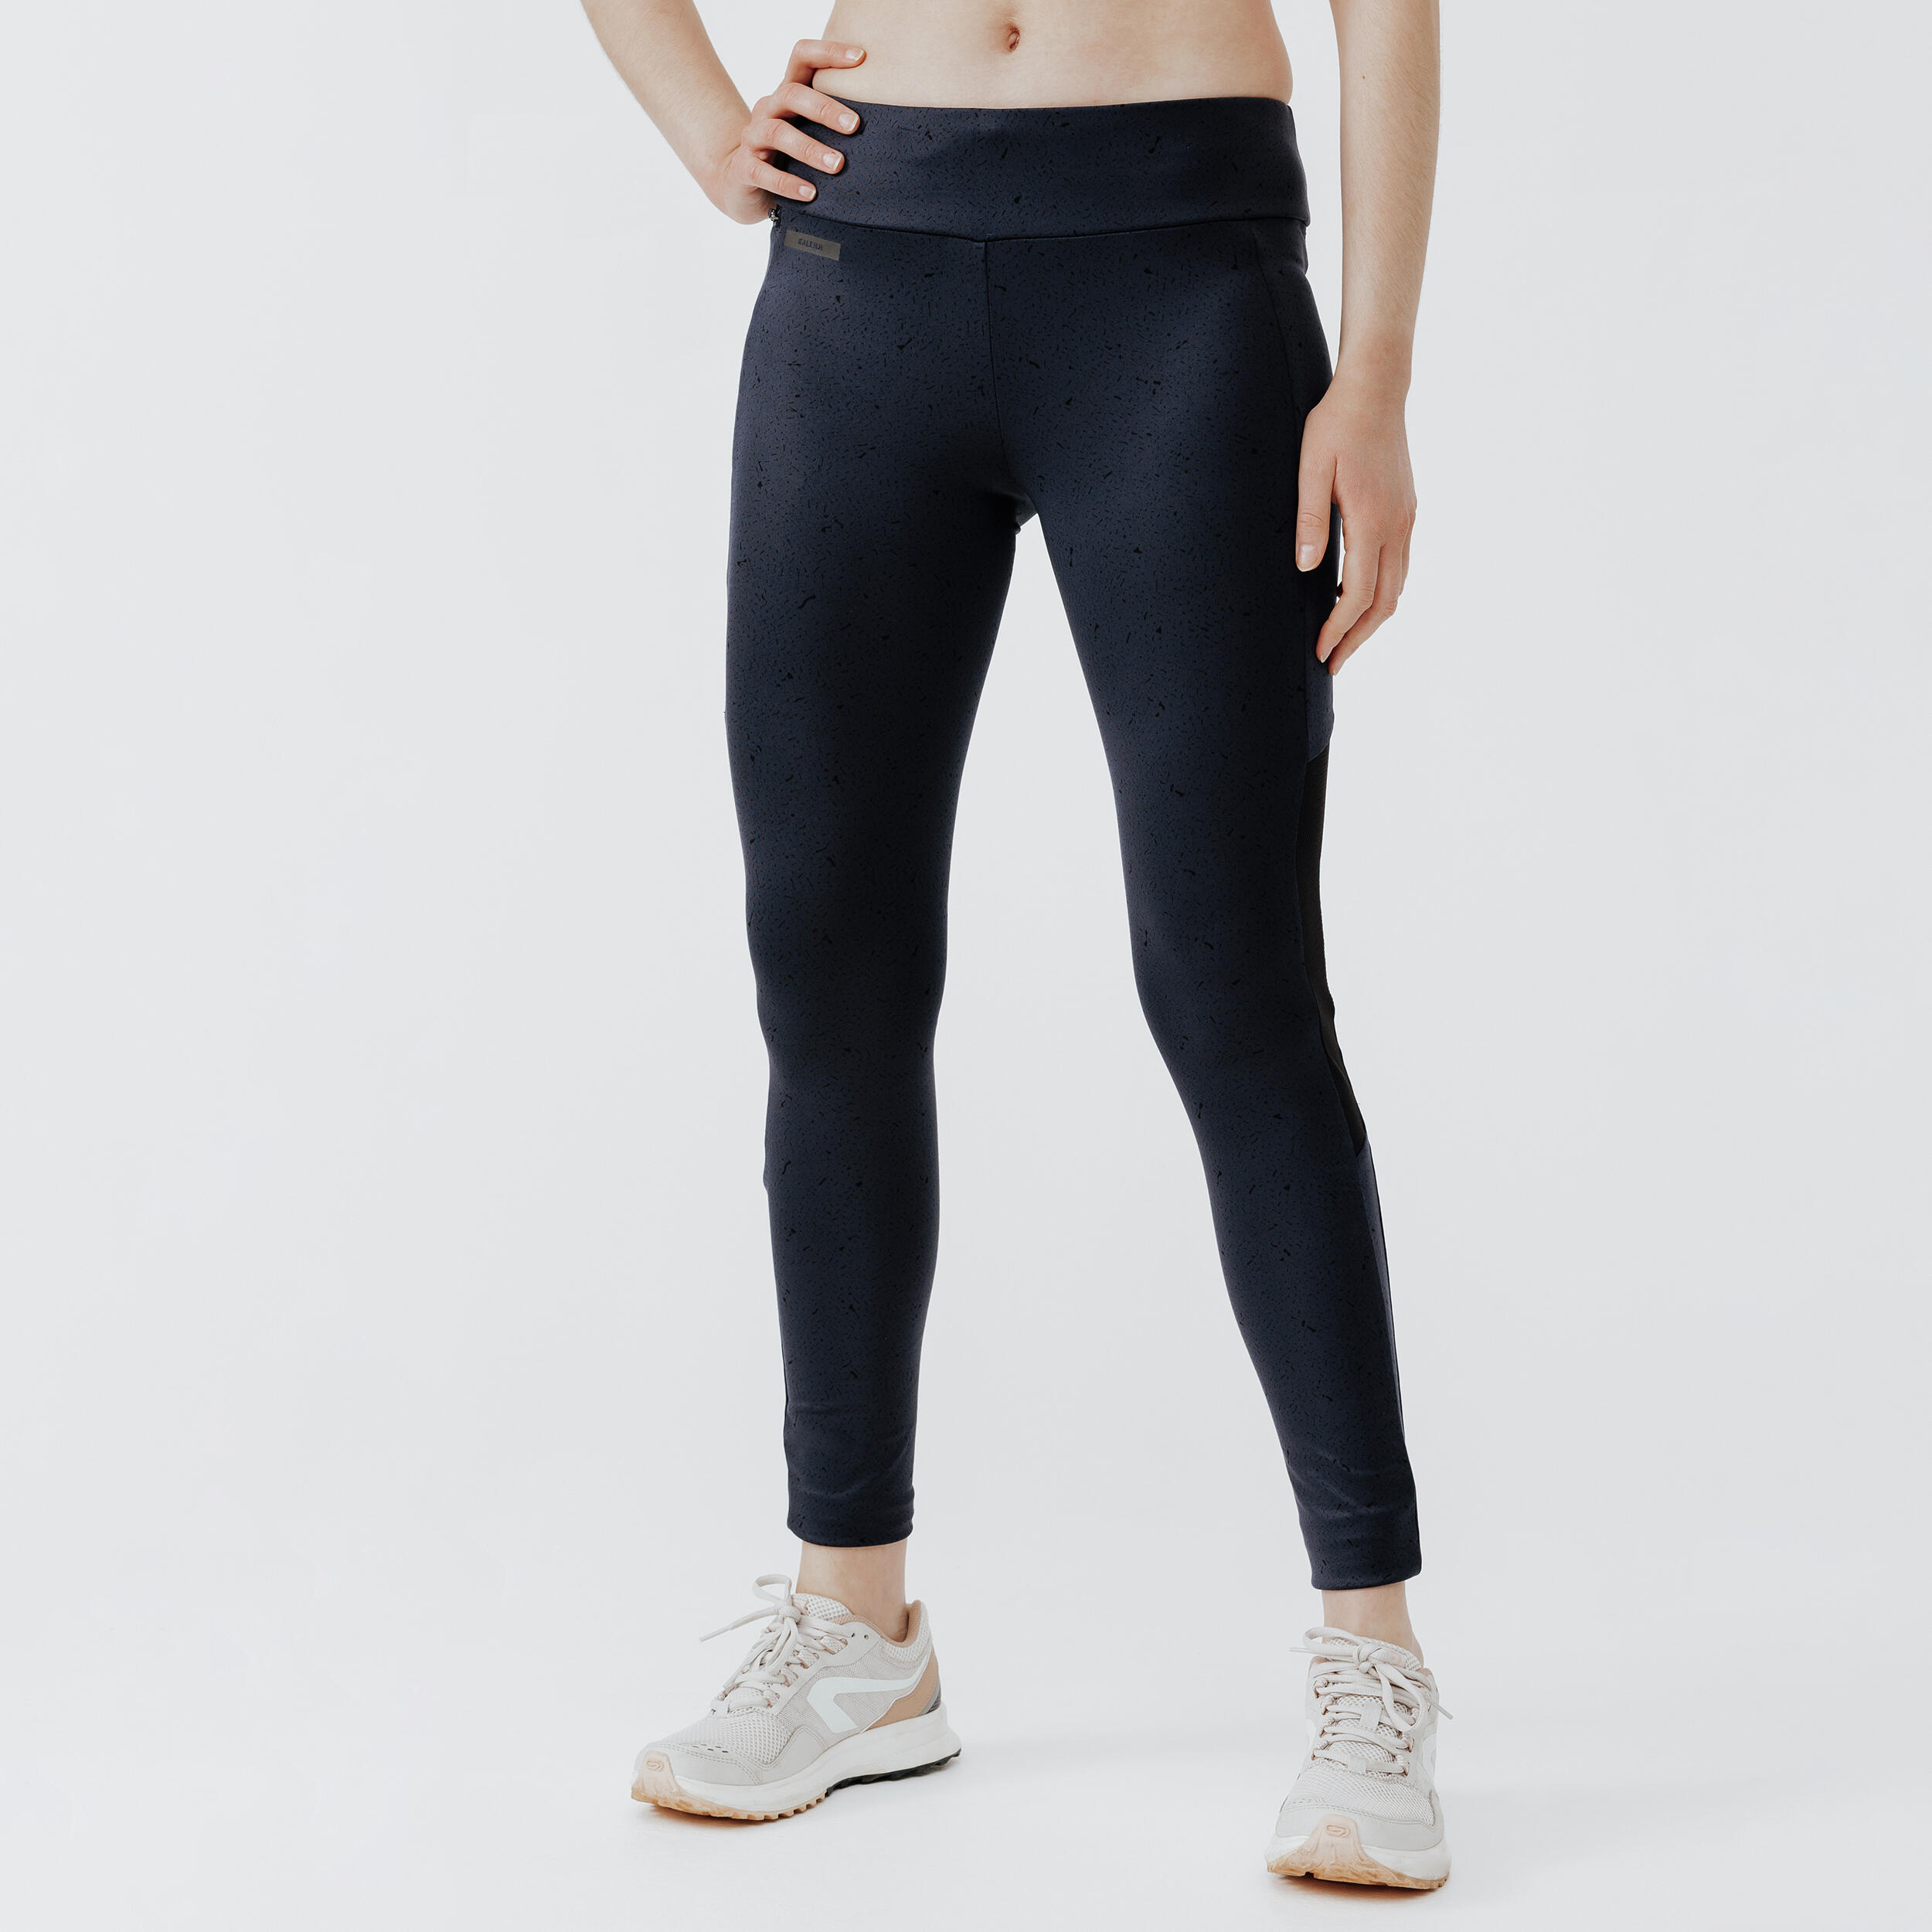 Women's Running Warm Long Leggings Warm+ - dark grey